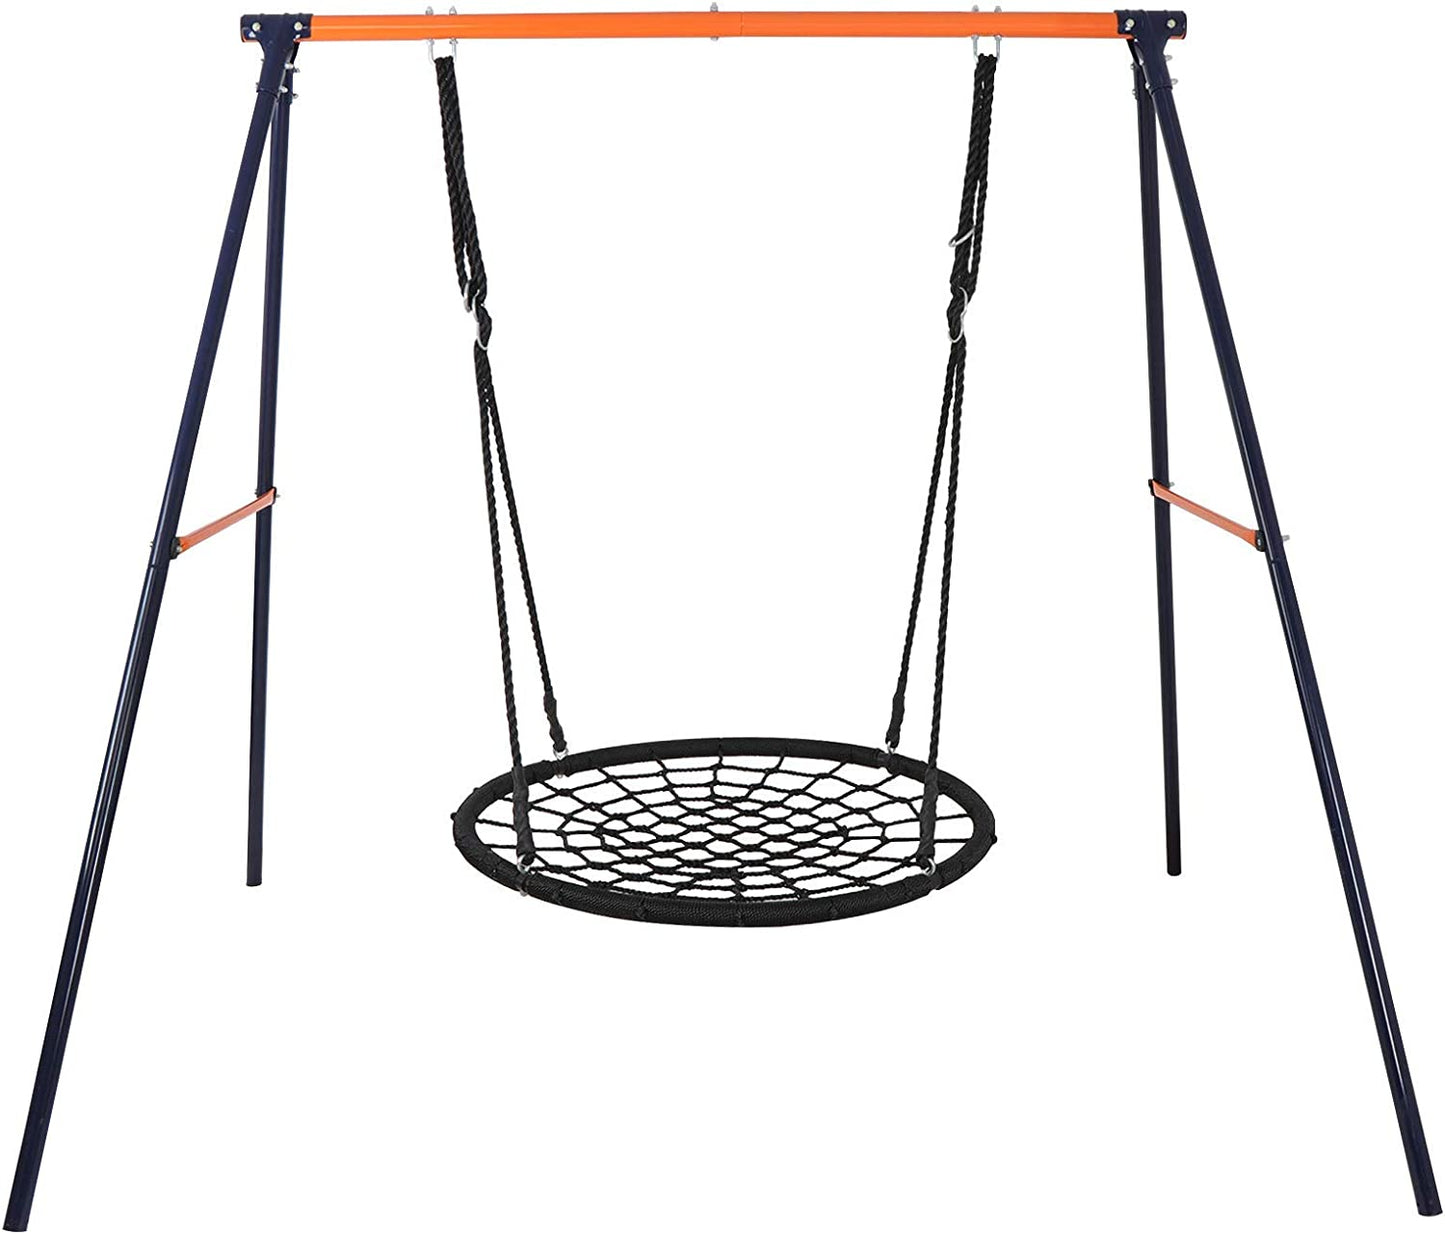 Kids Web Swing Set - 40’’ Spider Net Tree Swing and Metal Swing Frame Stand Swing Playset for Backyard Playground Kids Play Fun